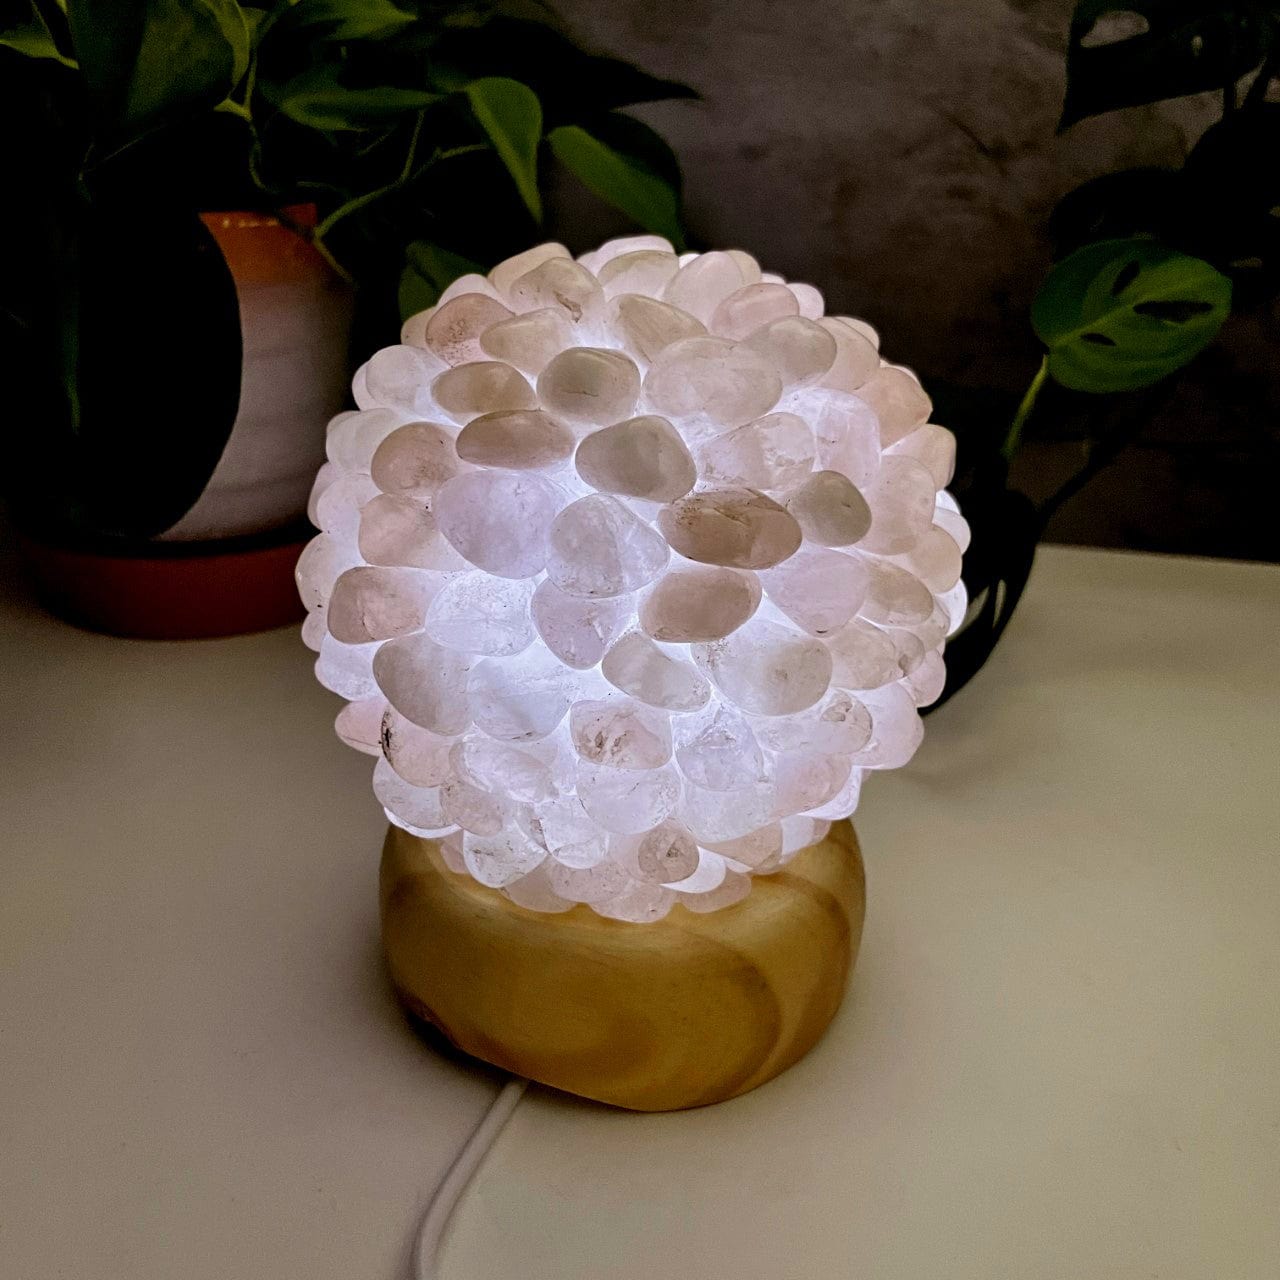 Rose Quartz tumbled stone lamp, lit with the inserted light